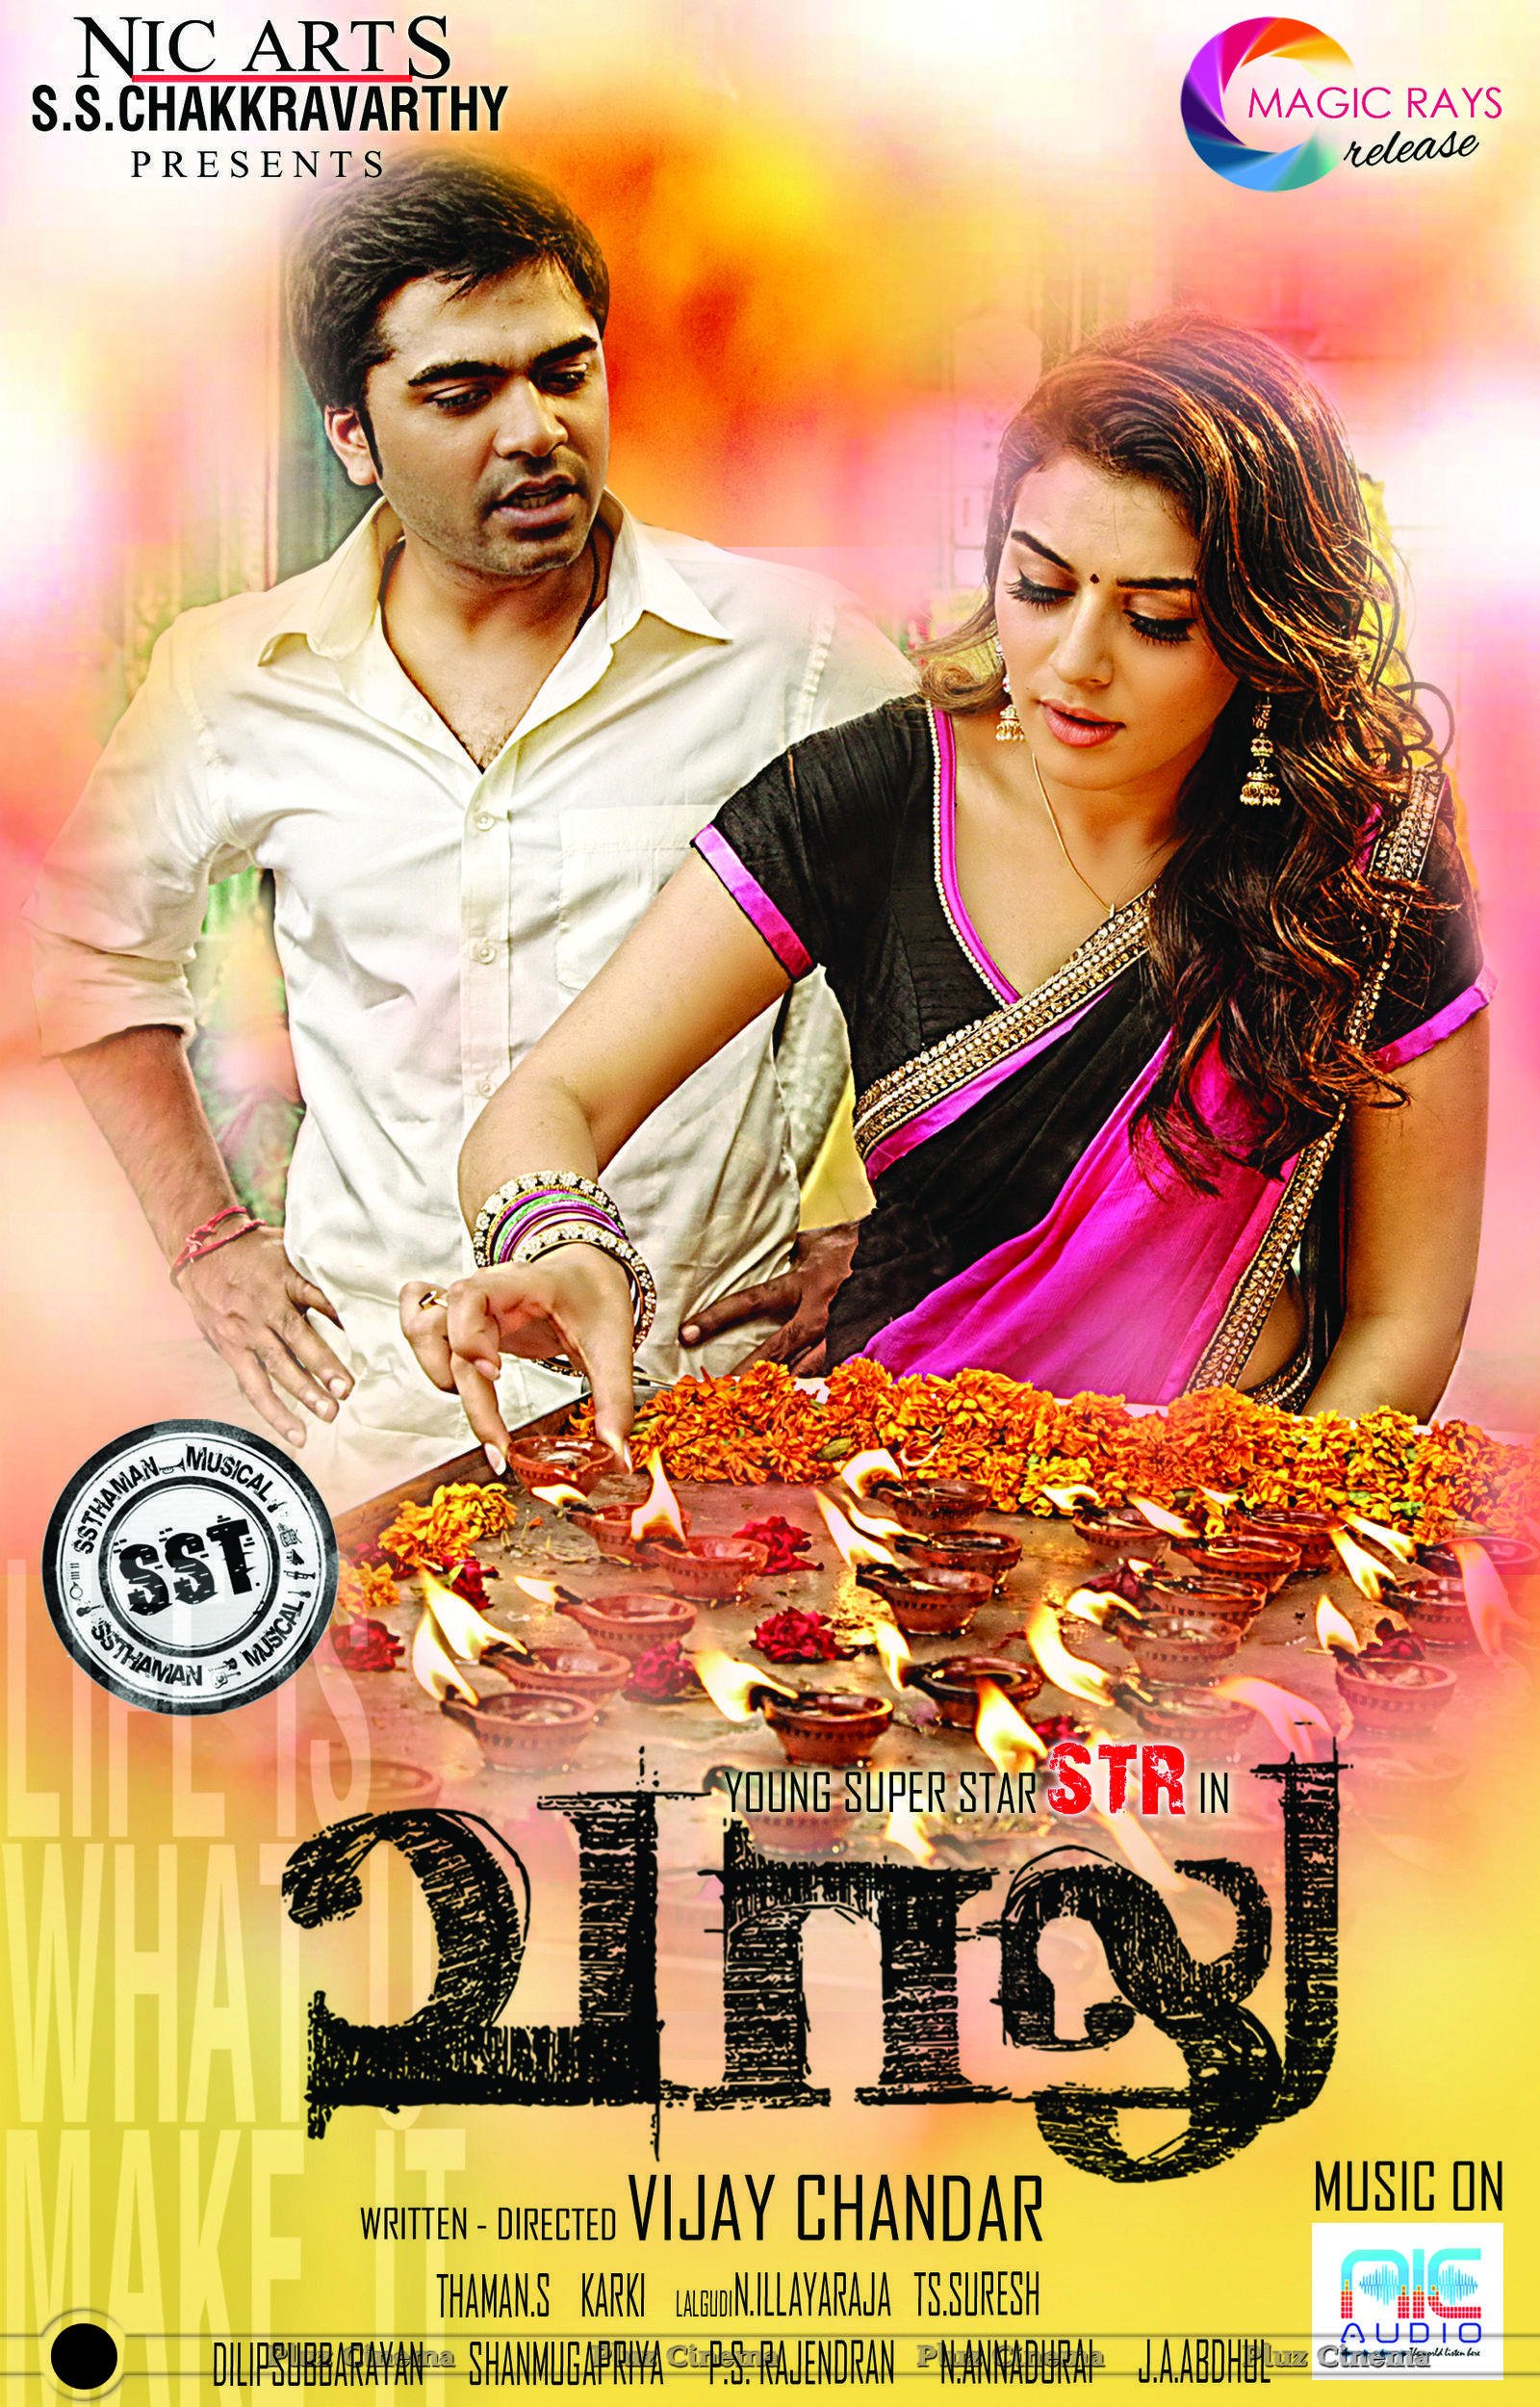 Tamil poster of the movie Vaalu